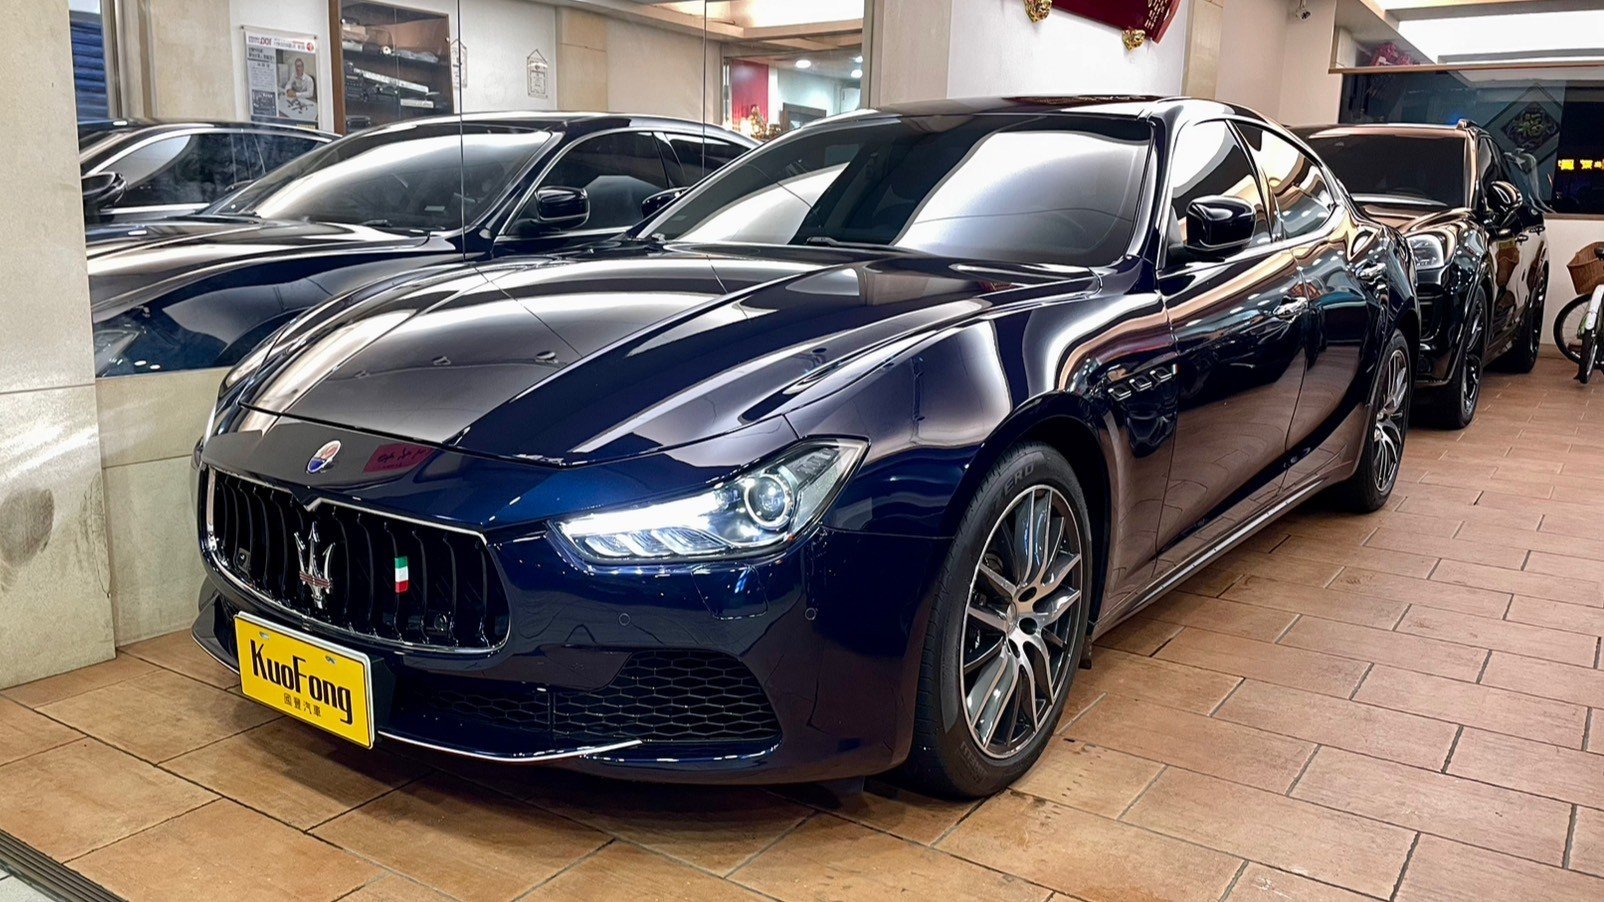 2014 Maserati 瑪莎拉蒂 Ghibli